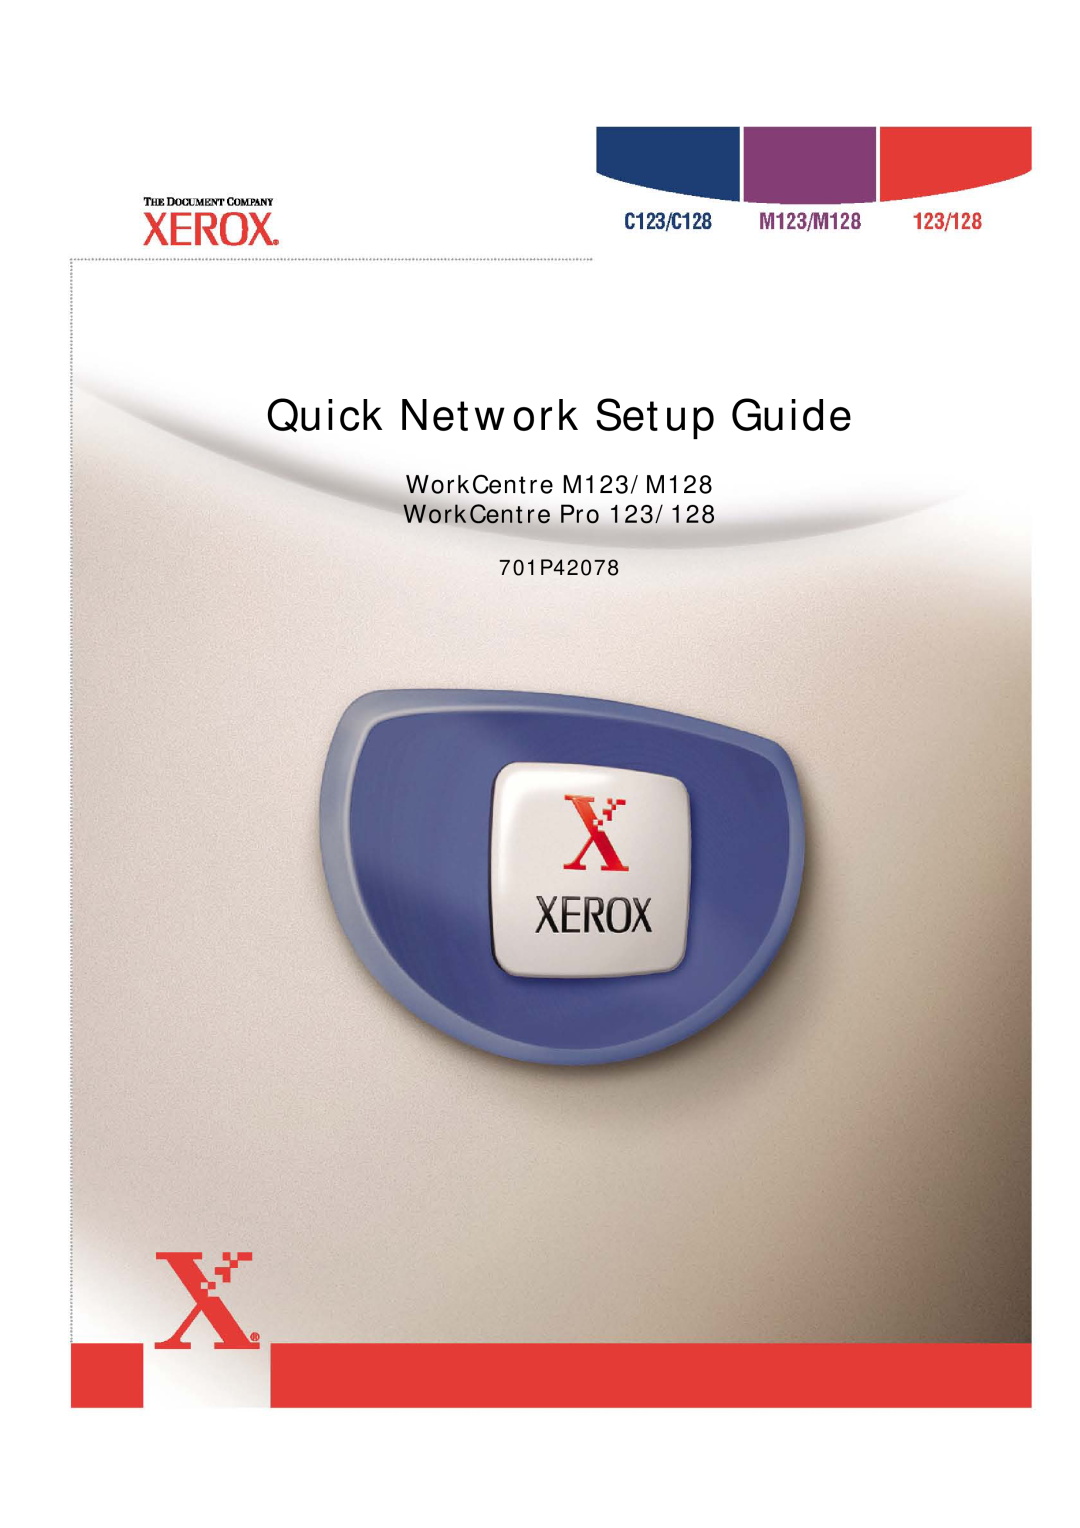 Xerox setup guide Quick Network Setup Guide, WorkCentre M123/M128 WorkCentre Pro 123/128, 701P42078 